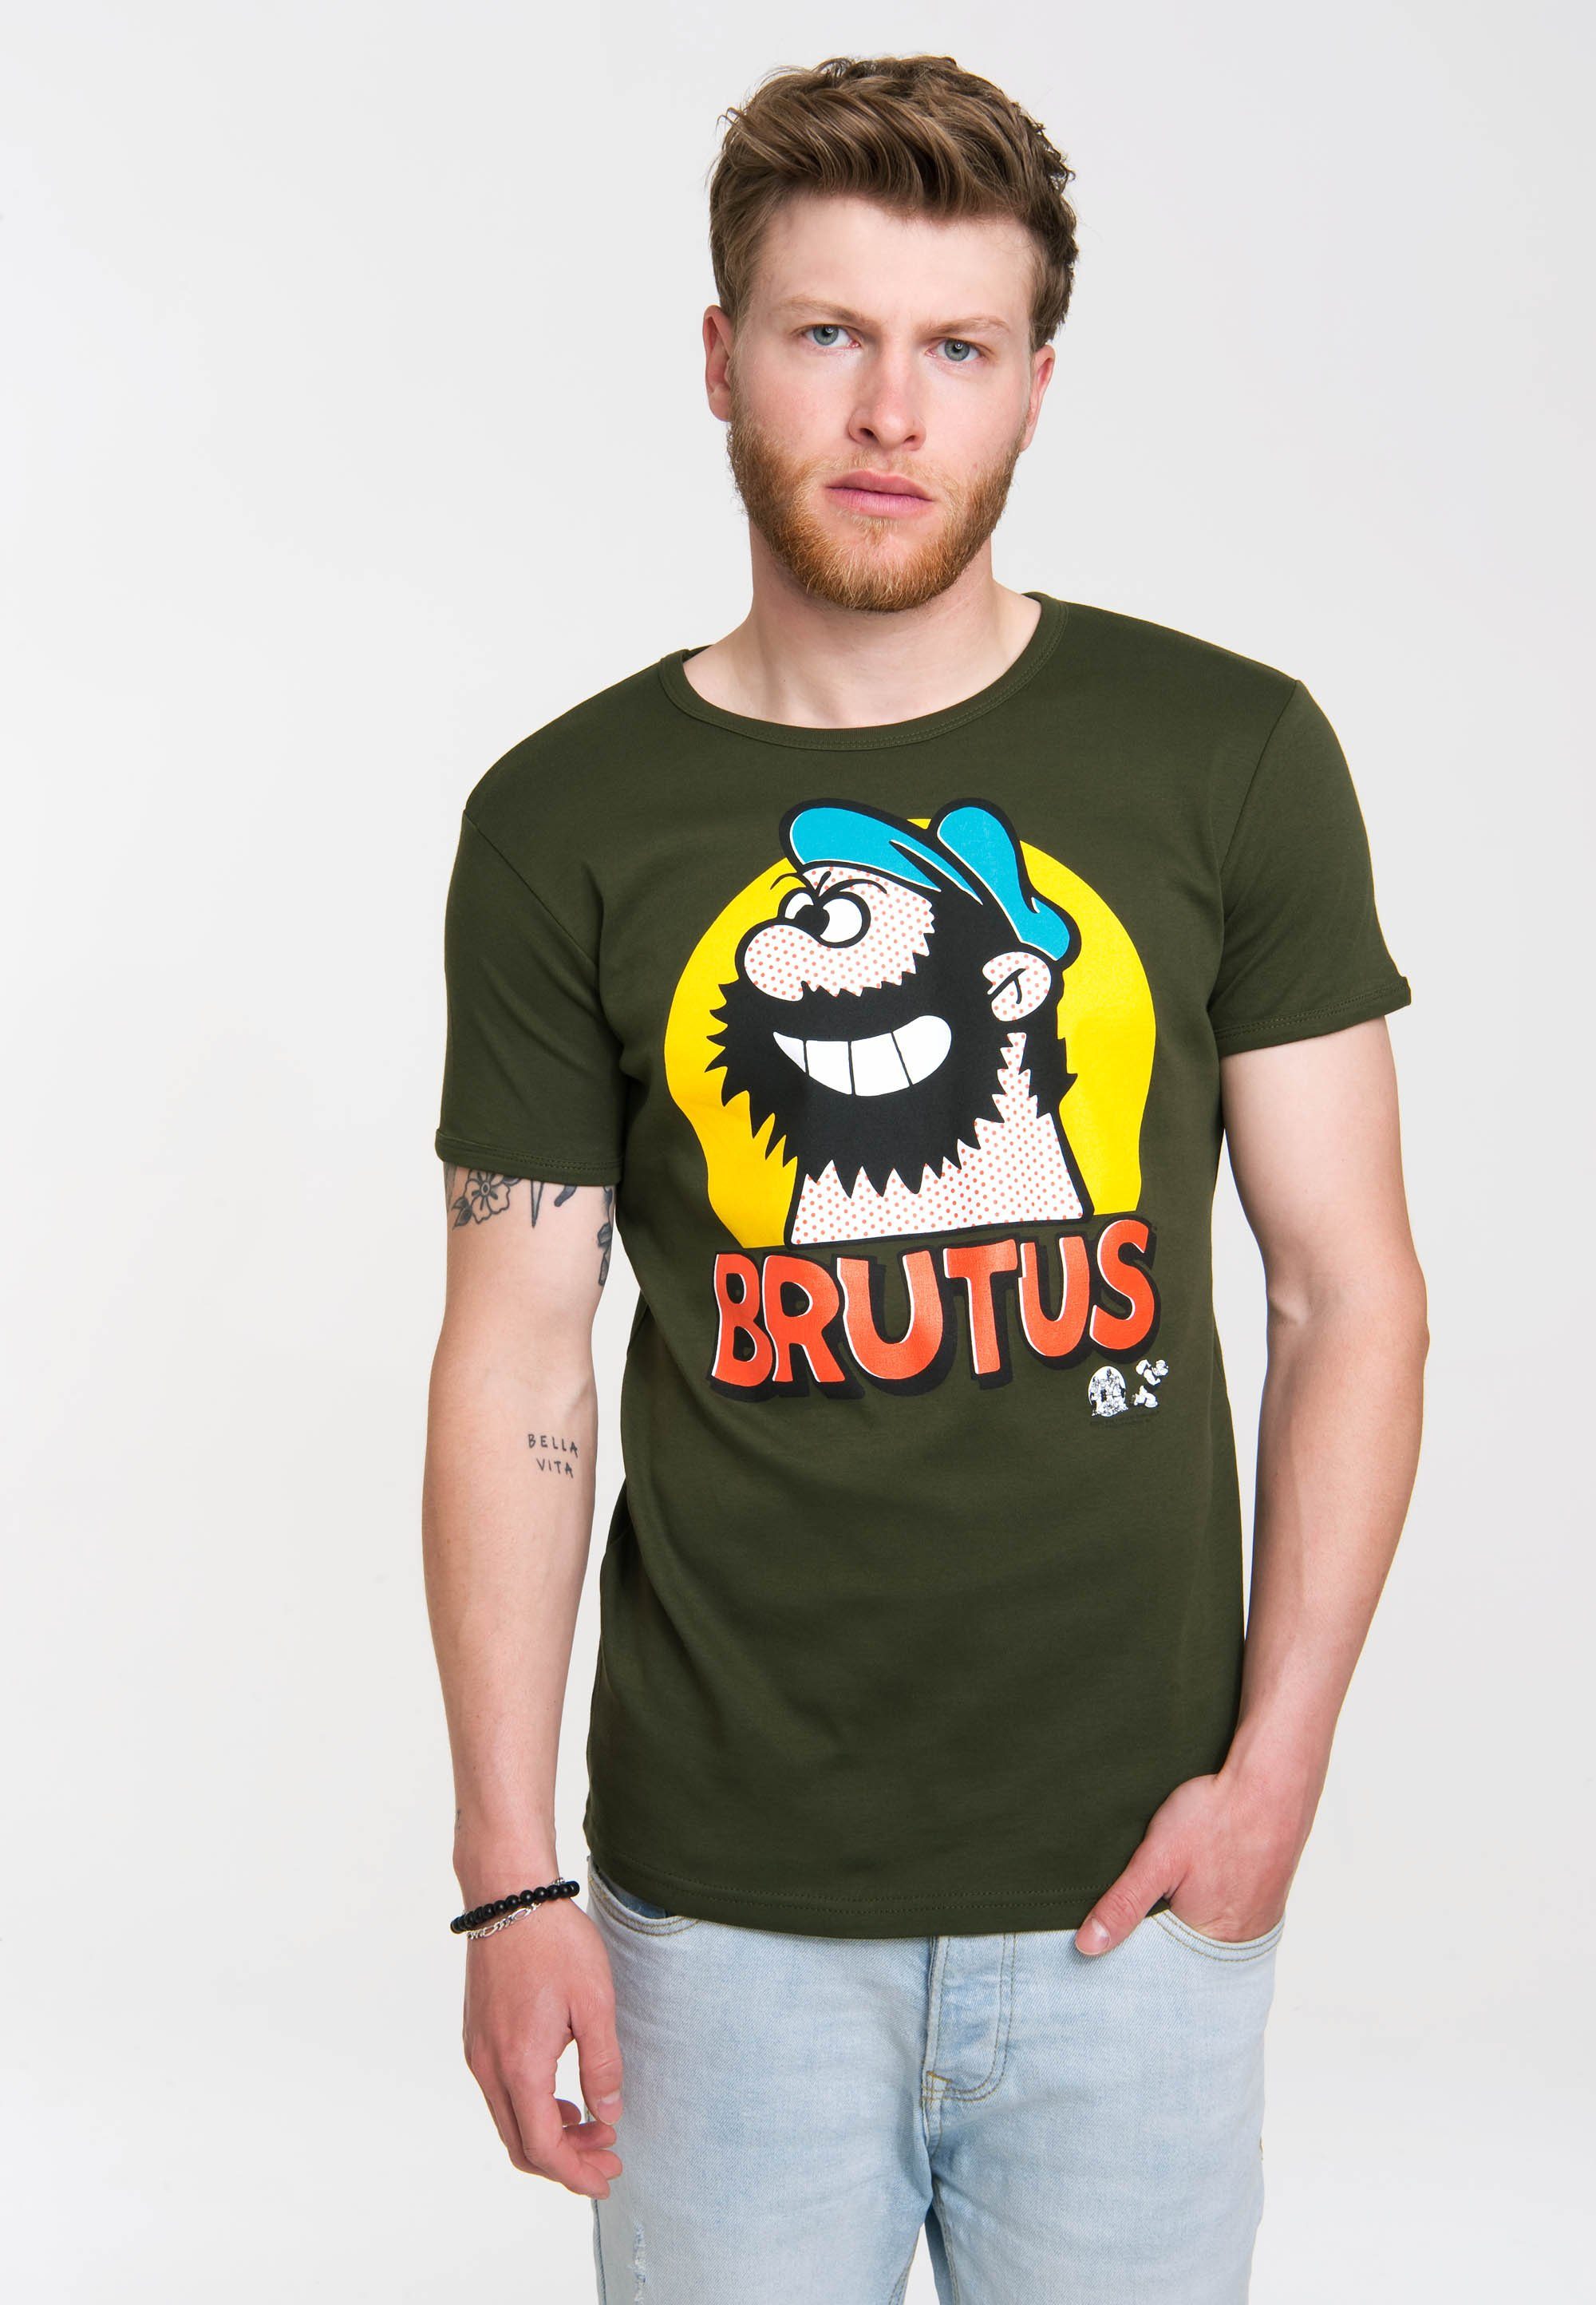 Vintage-Print Brutus lässigem mit T-Shirt LOGOSHIRT